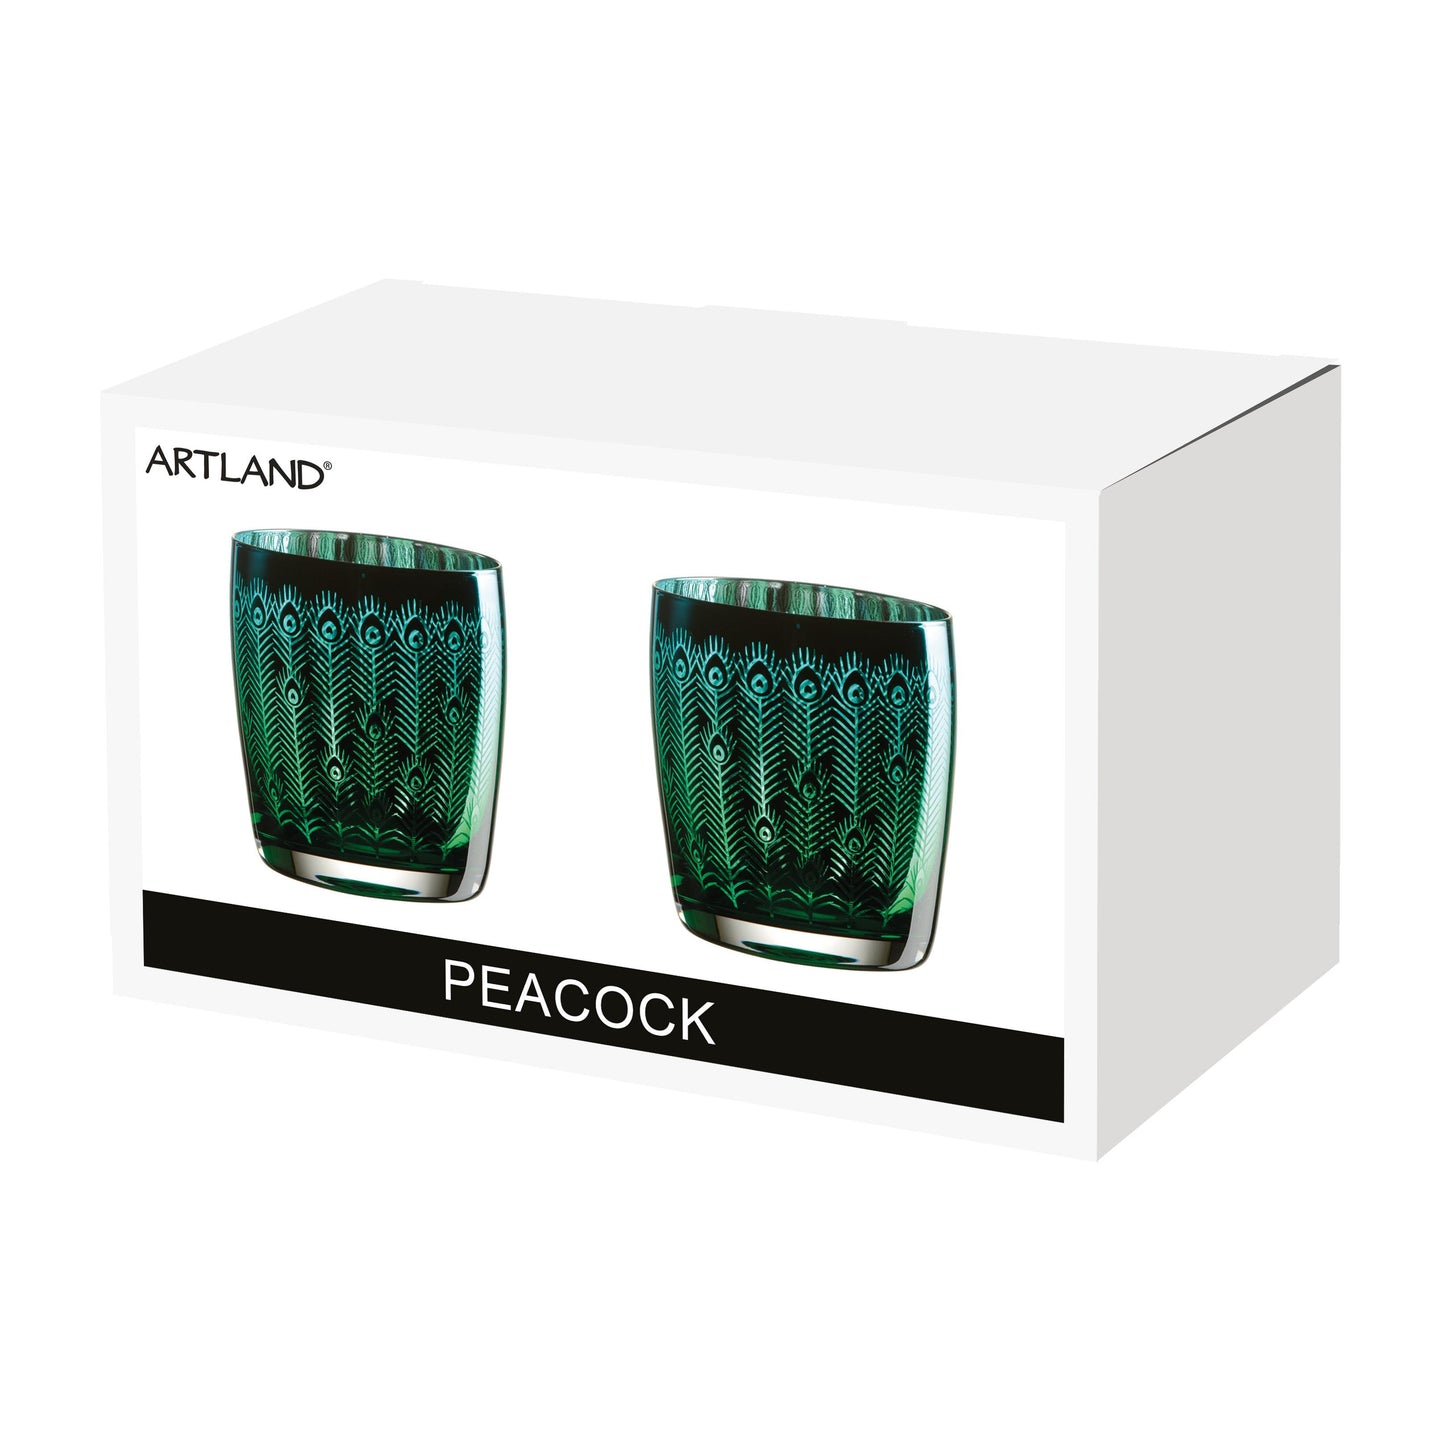 Artland Glass Peacock DOF Tumbler - Set of 2 Double Old Fashioned Glasses